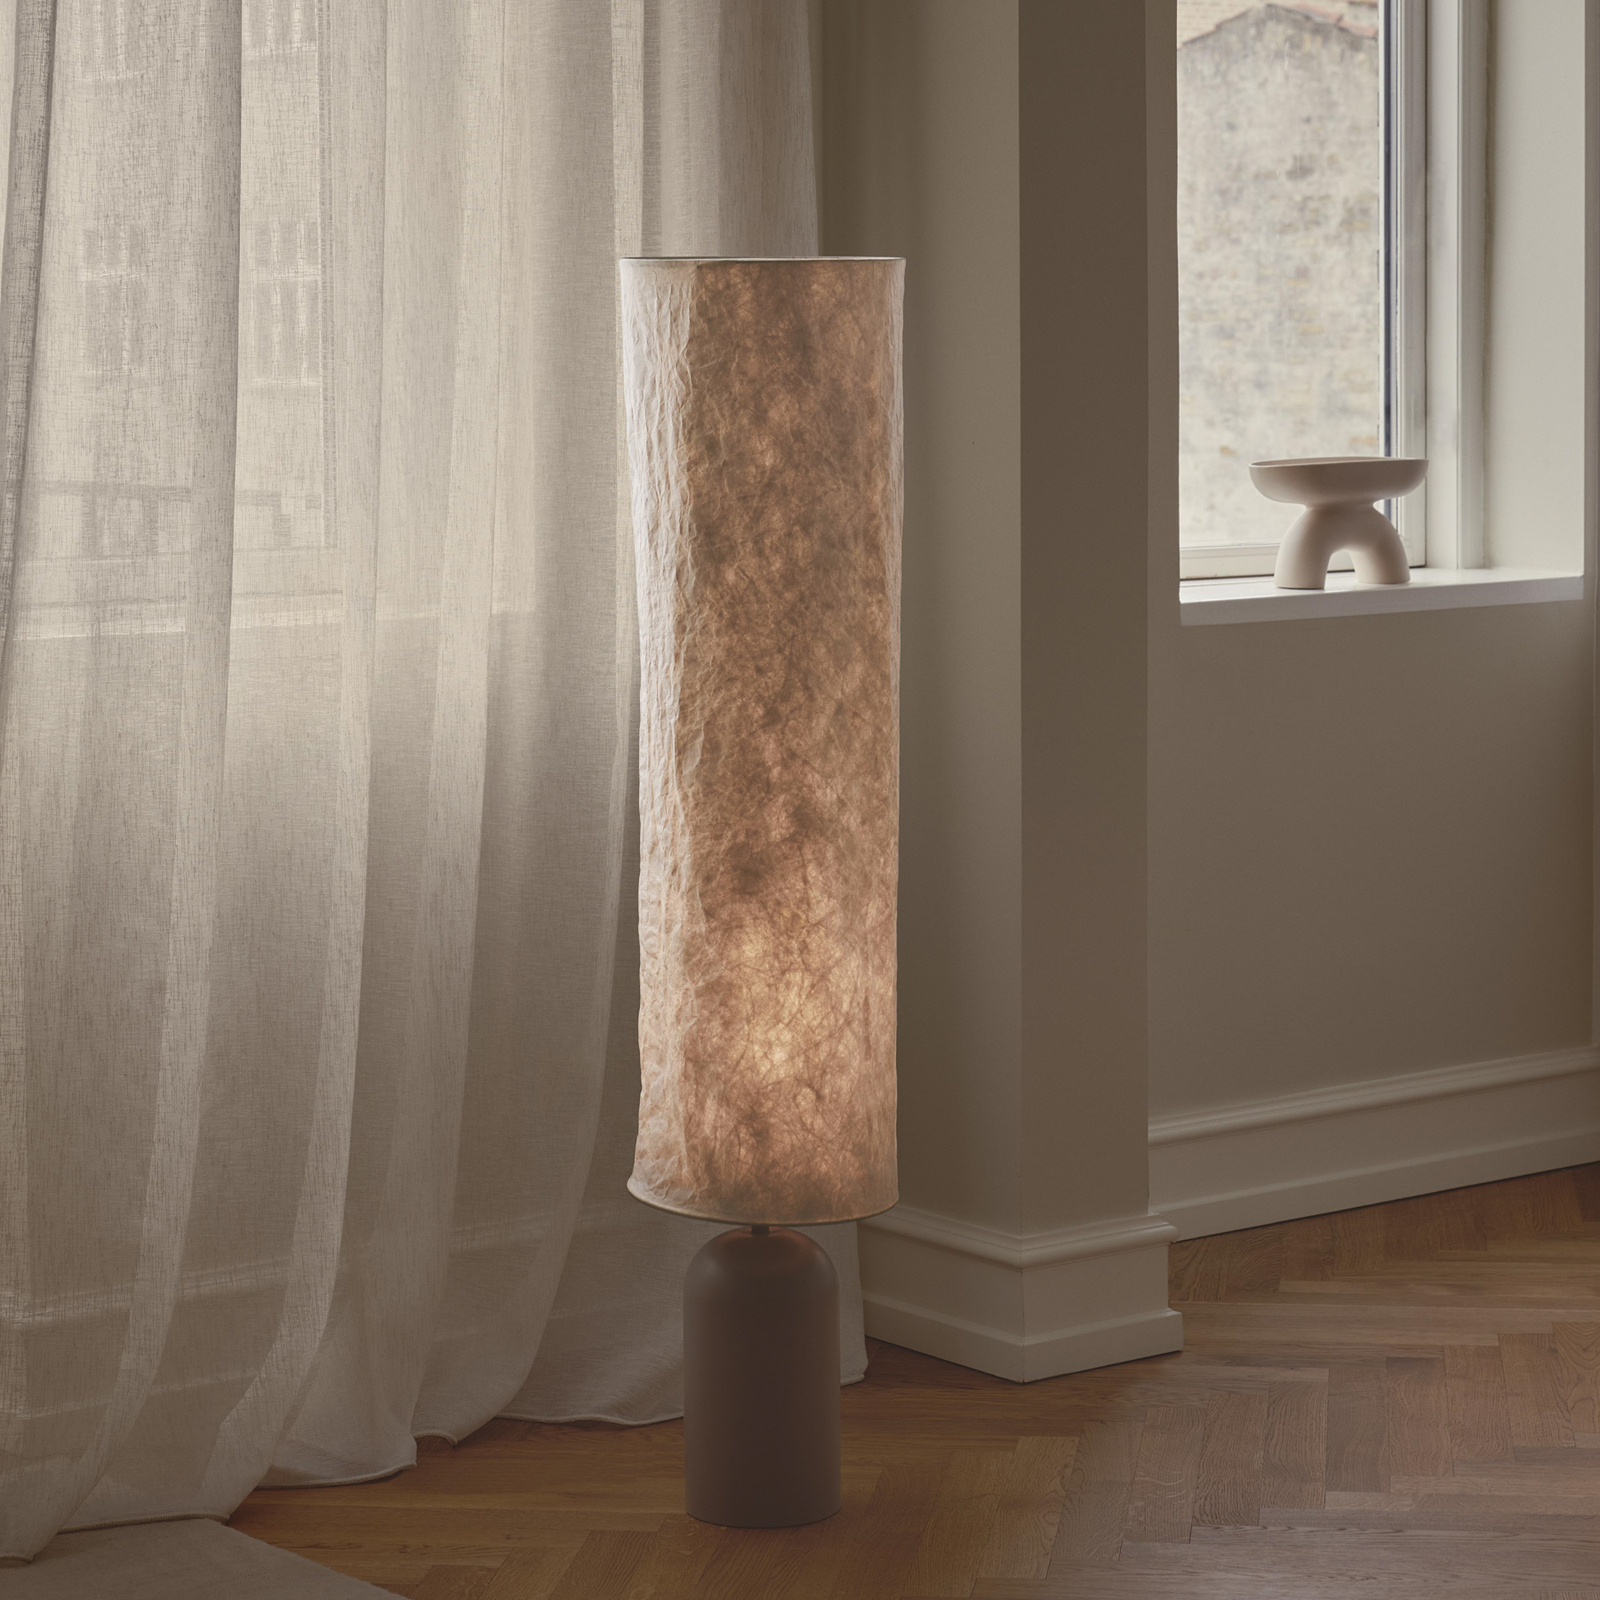 Talli gulvlampe, brun, Tyvek/metall, høyde 113 cm